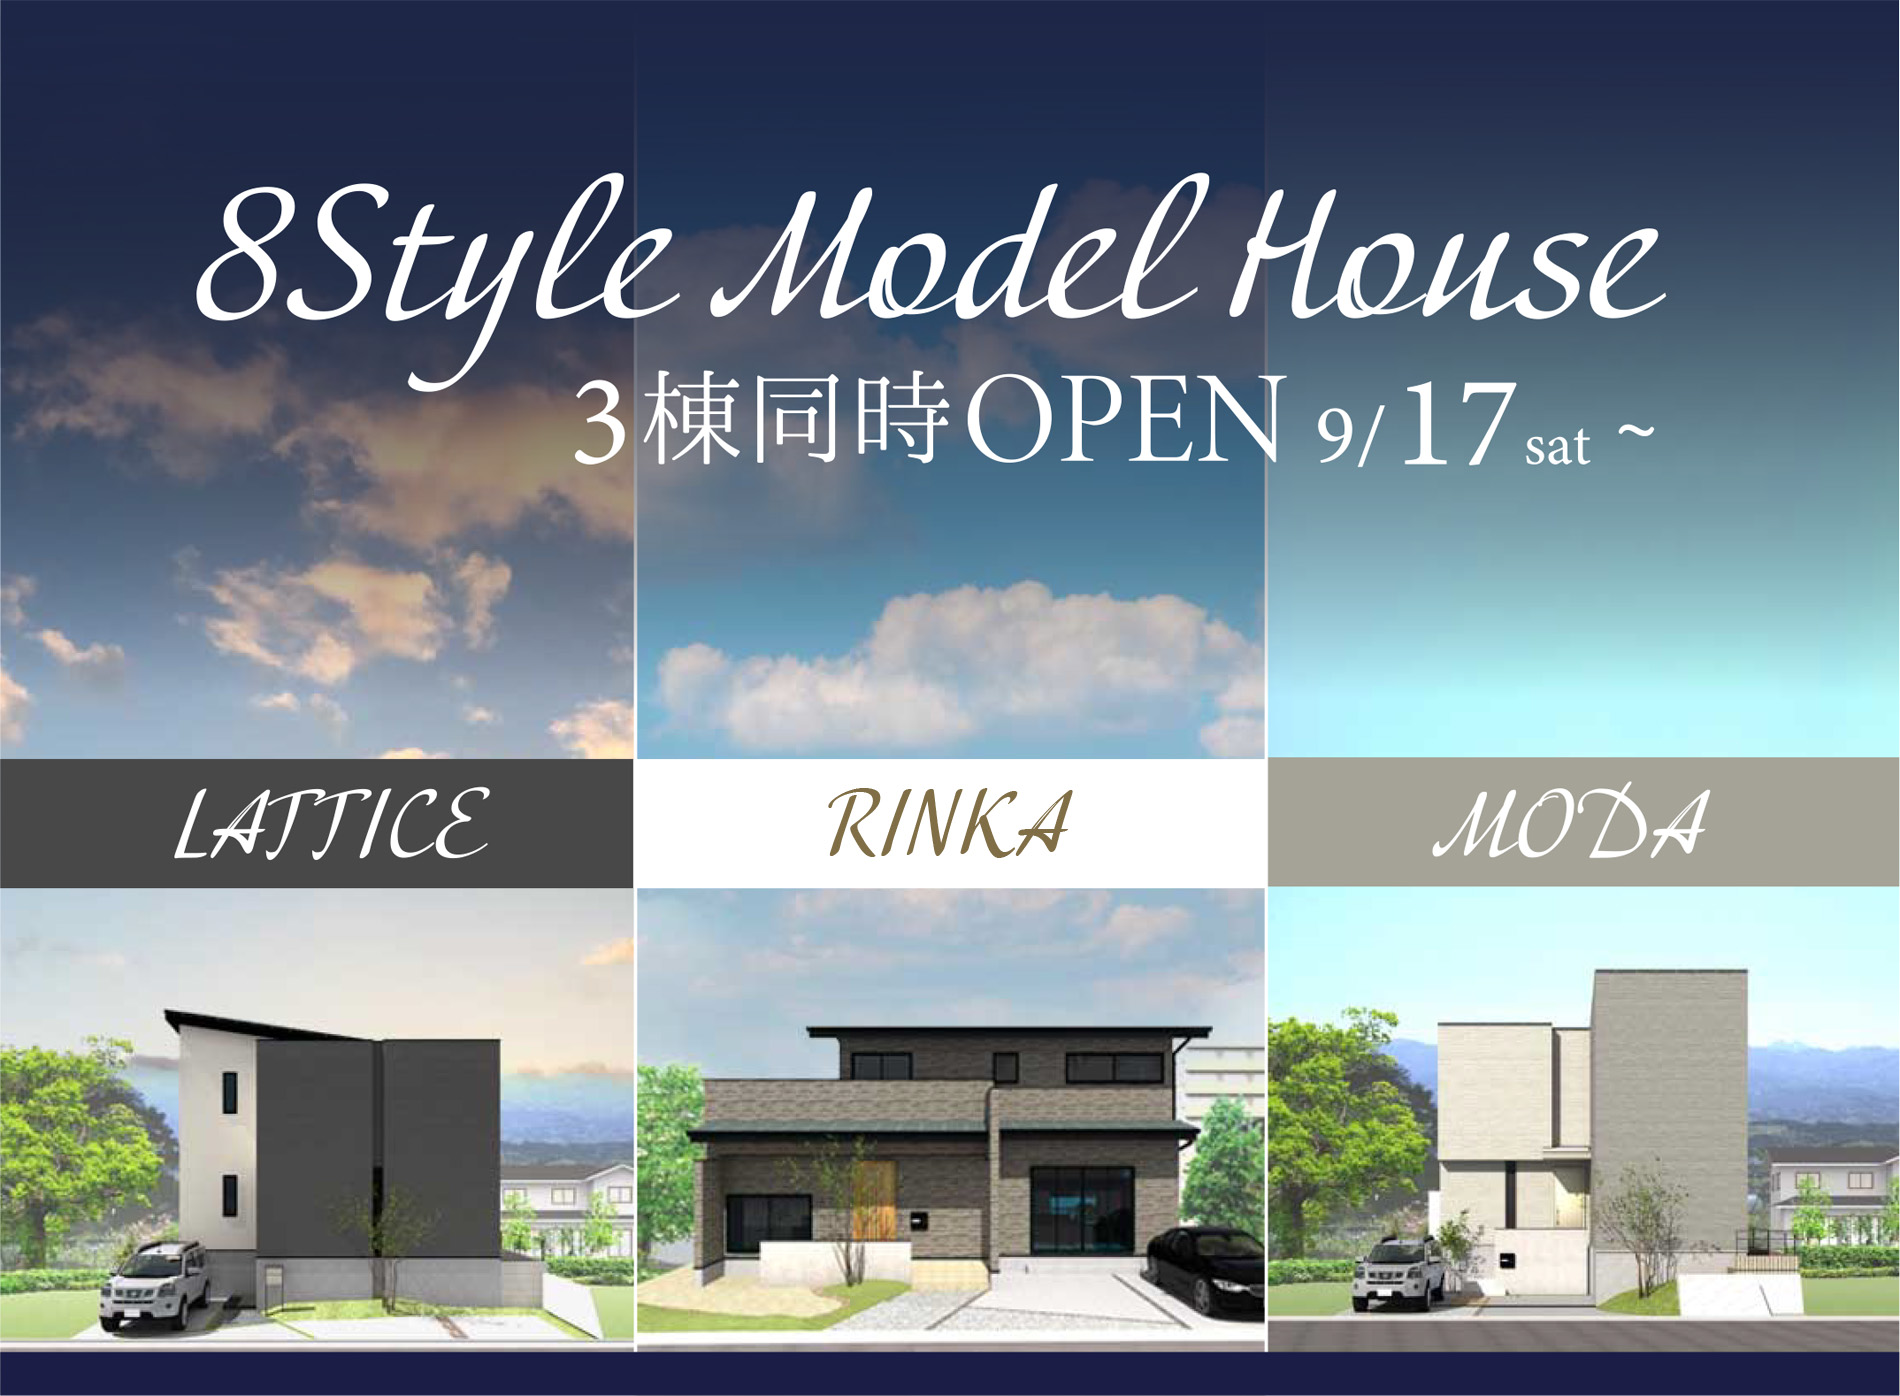 8style Model House 3棟同時OPEN